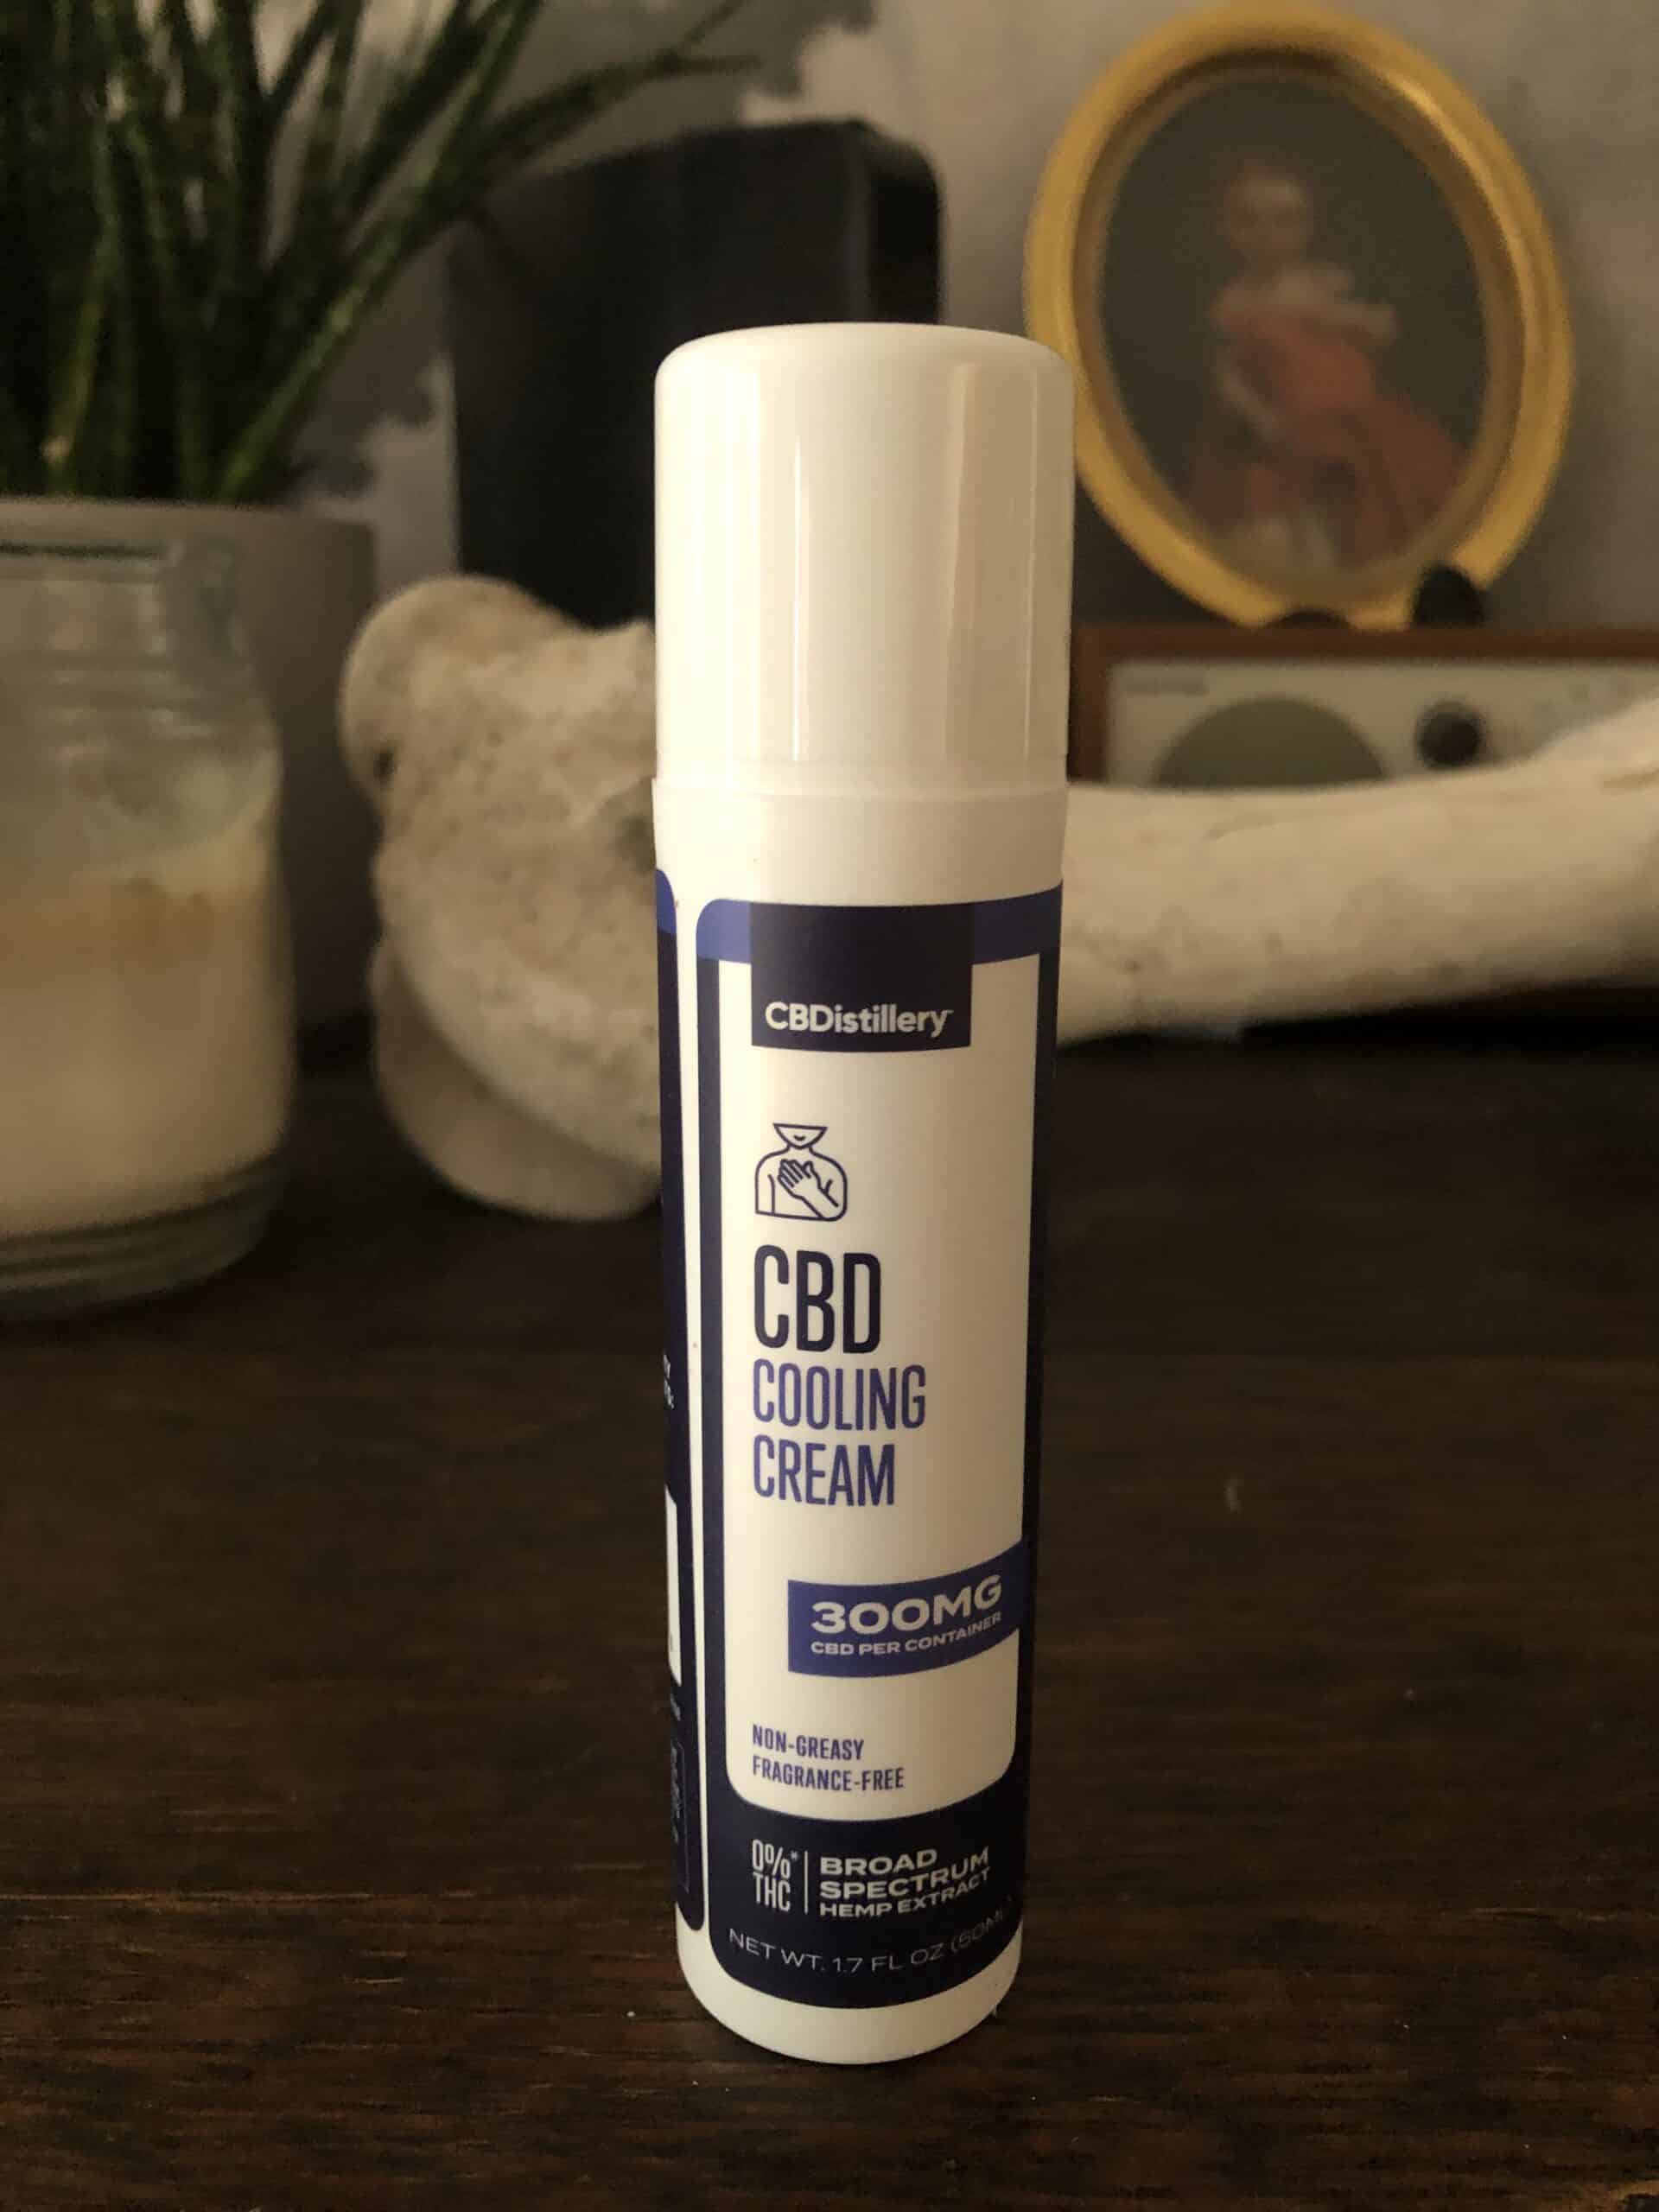 Cbdistillery CBD Cooling Cream Save On Cannabis Review Beauty Shot